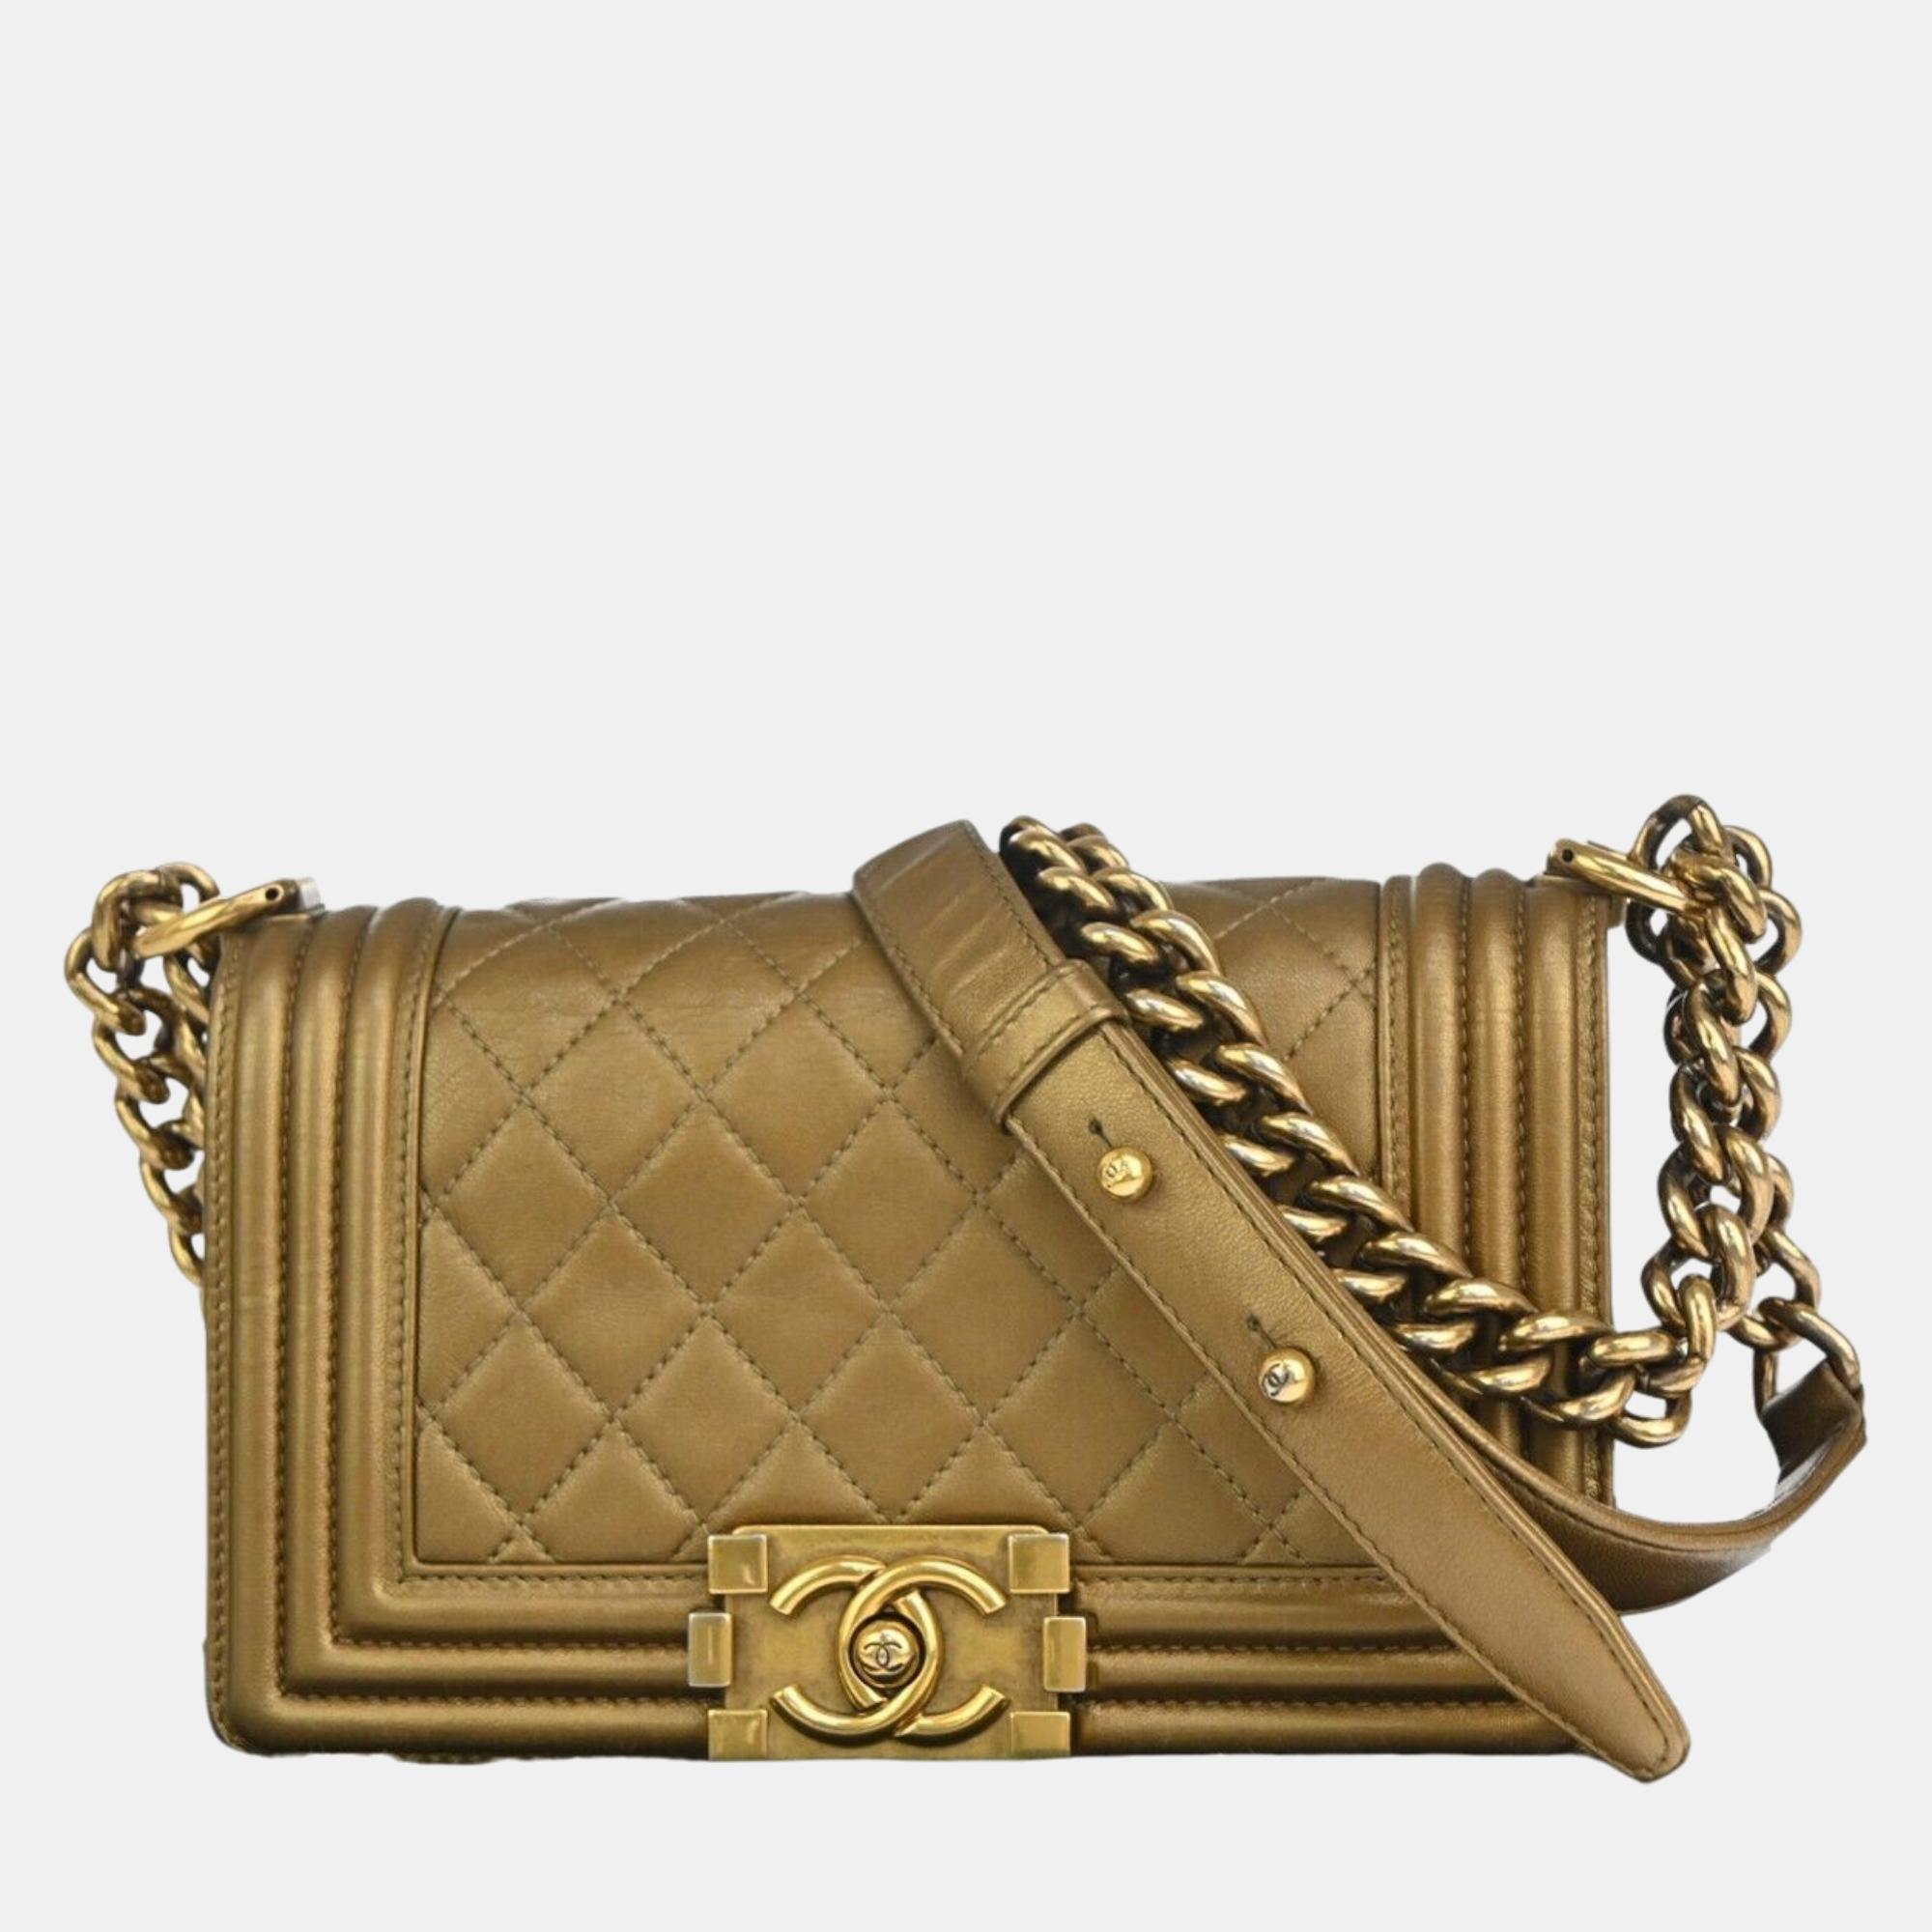 Chanel gold leather small boy shoulder bag